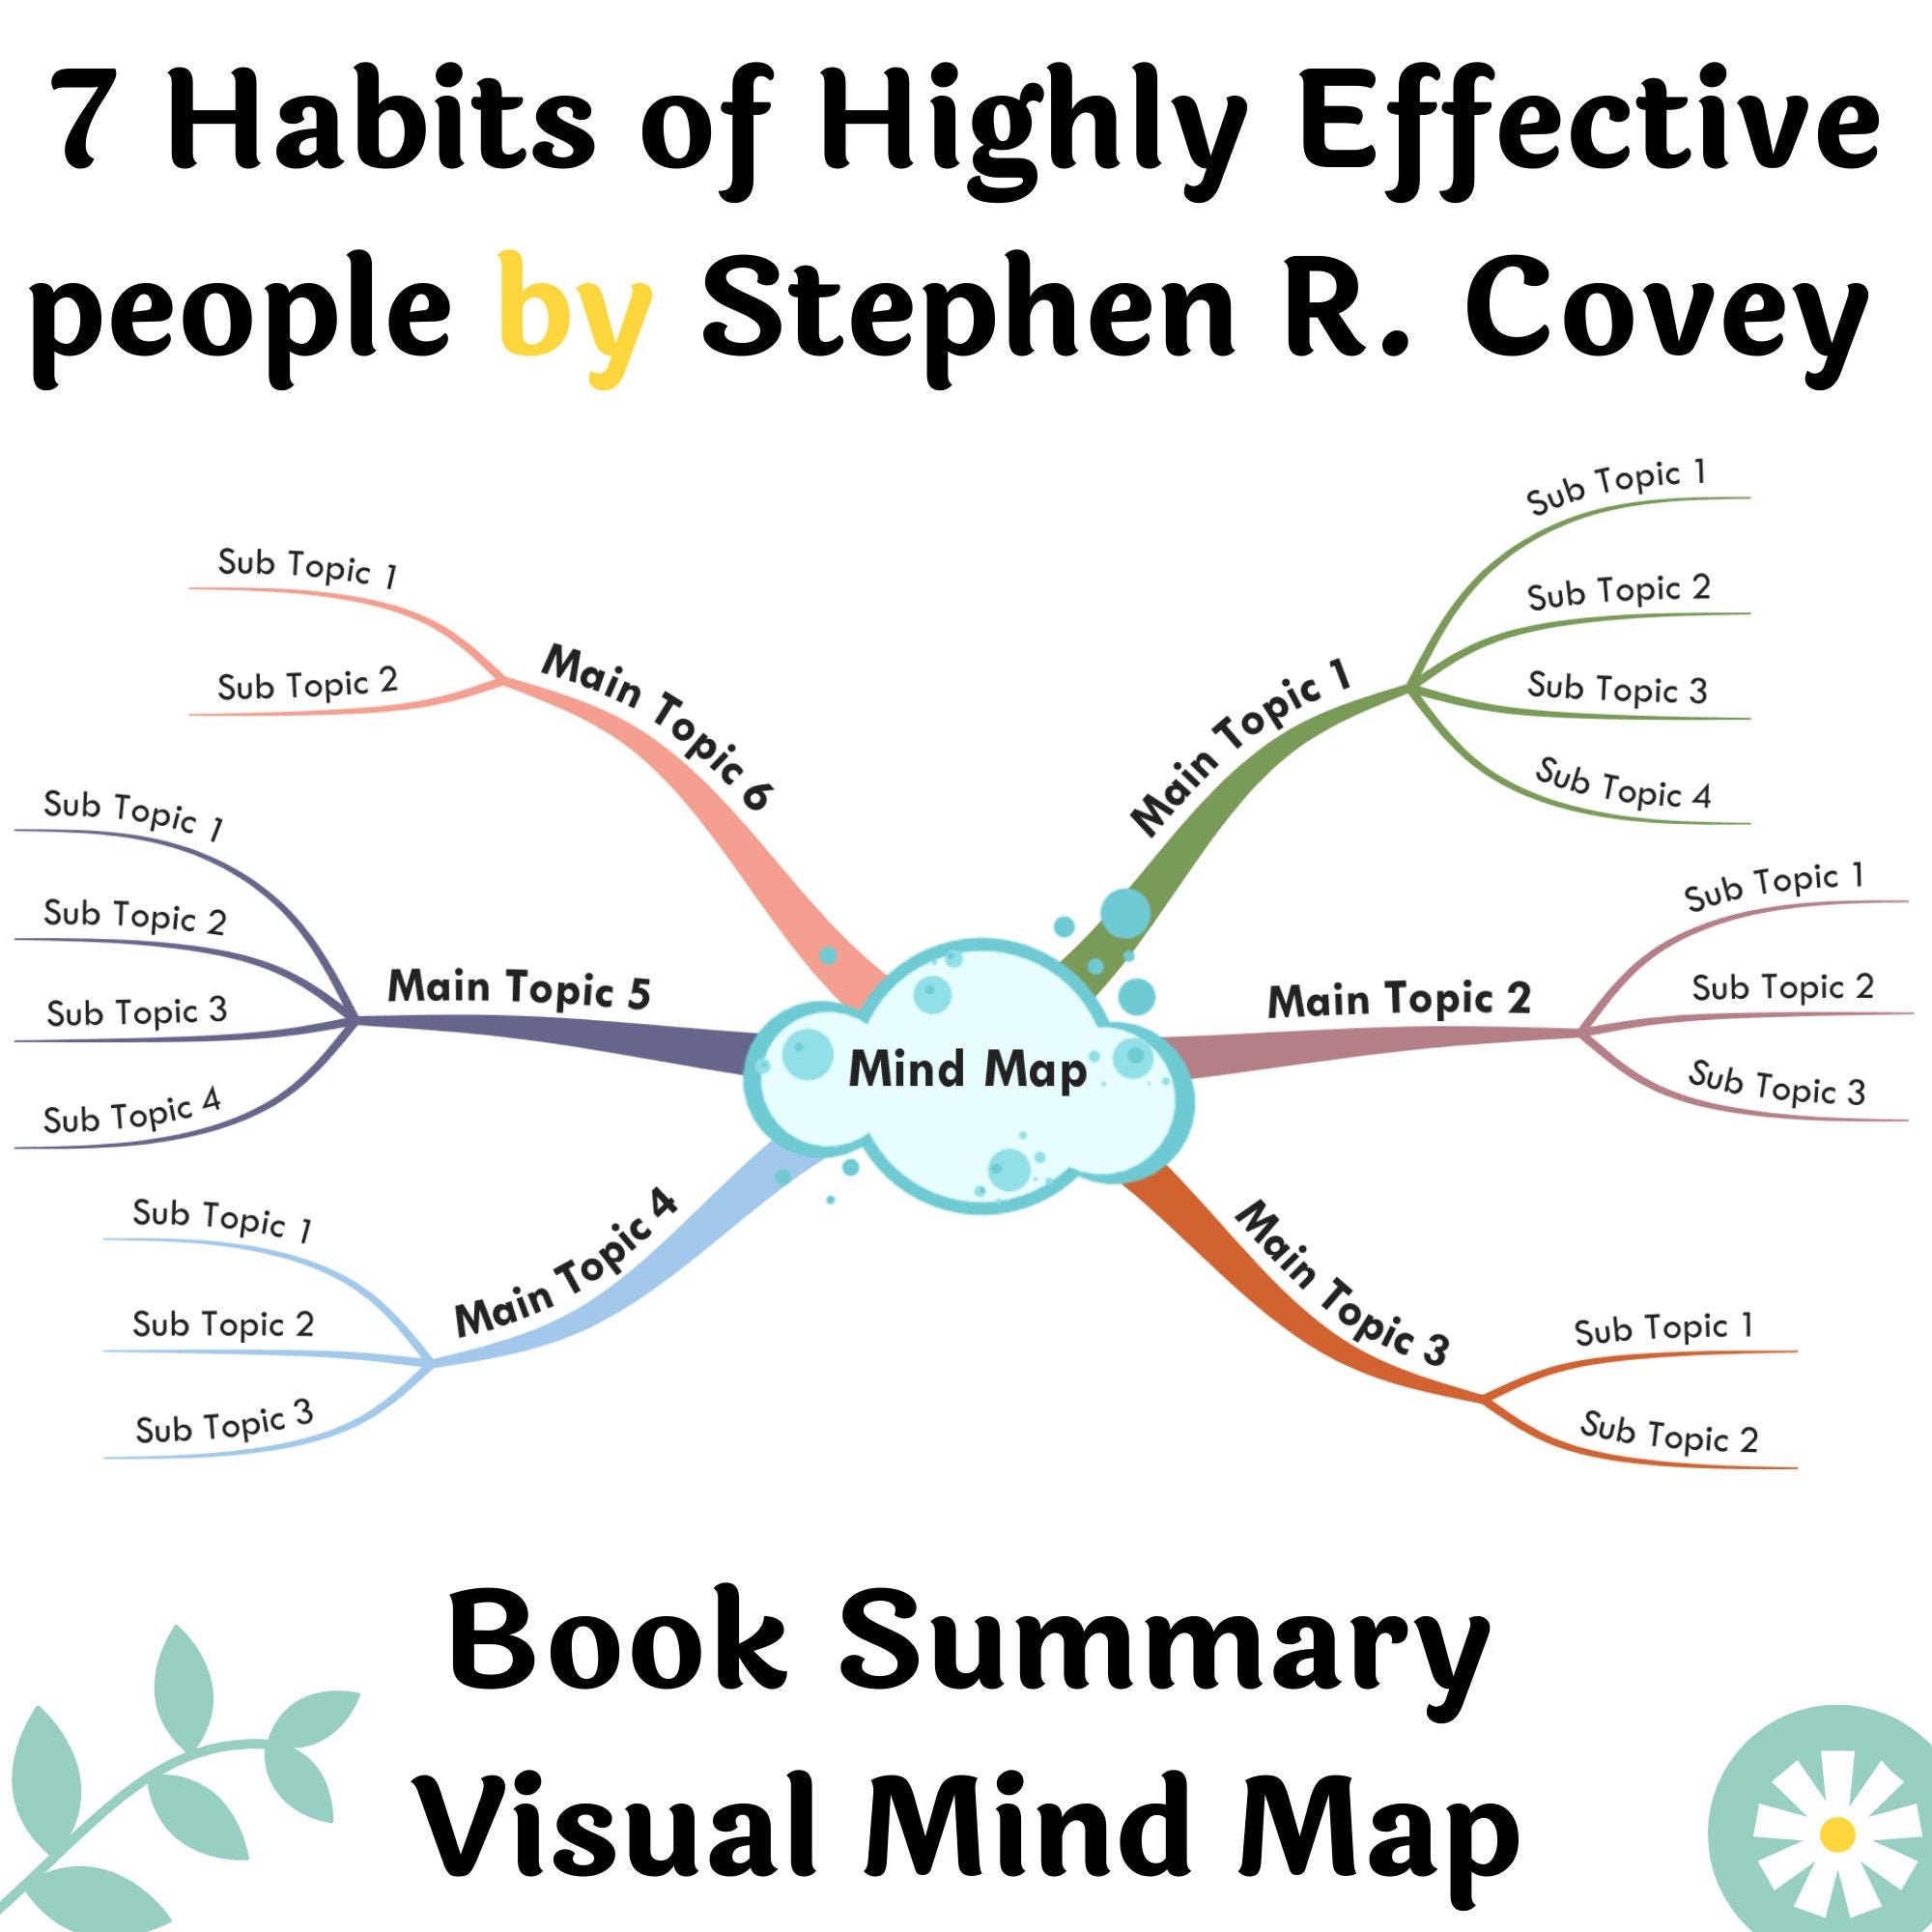 stephen covey 7 habits summary pdf